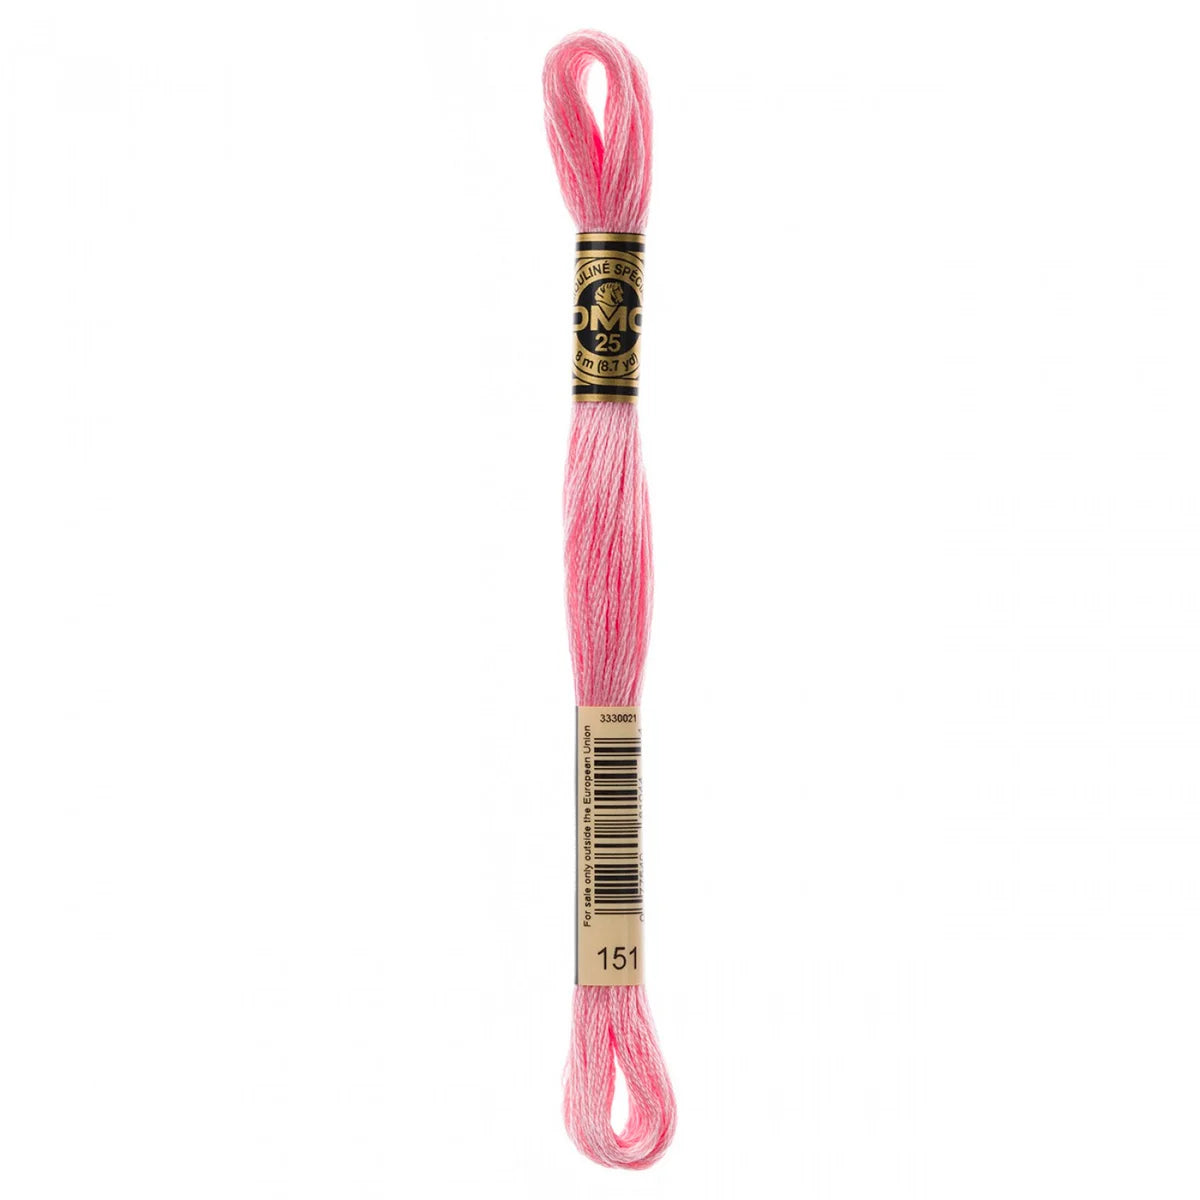 DMC 151 - Pink - DMC 6 Strand Embroidery Thread, Thread & Floss, Thread & Floss, The Crafty Grimalkin - A Cross Stitch Store